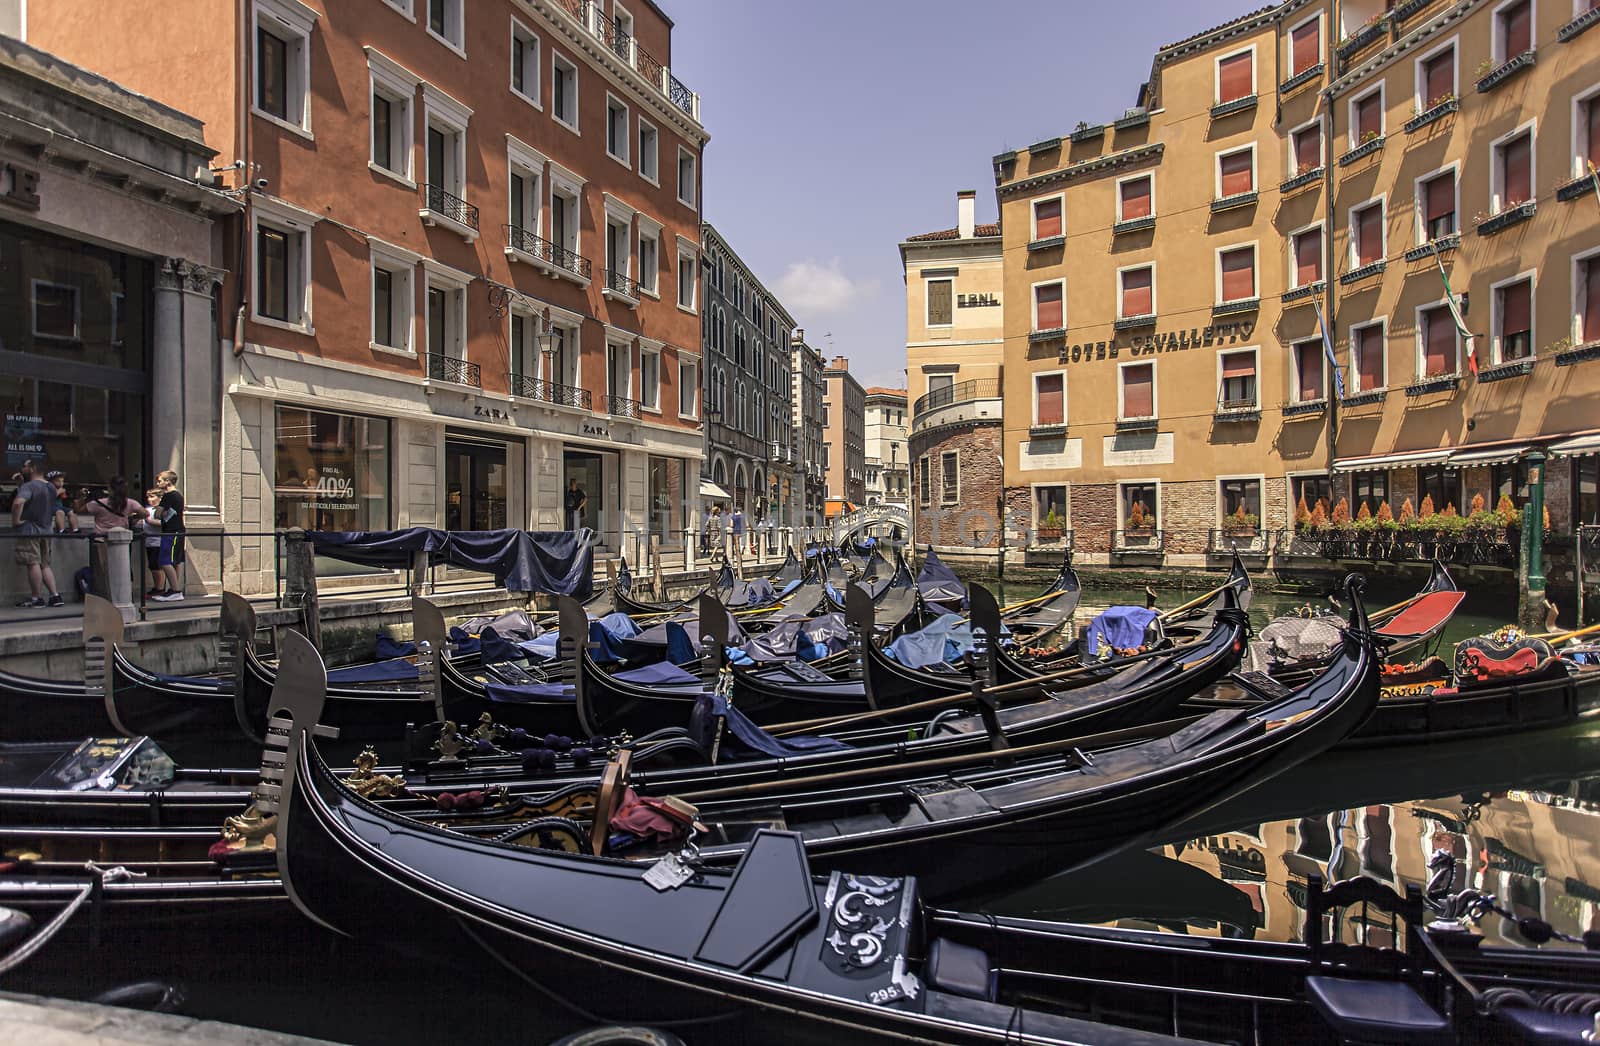 Gondolas in Venice Landscape by pippocarlot